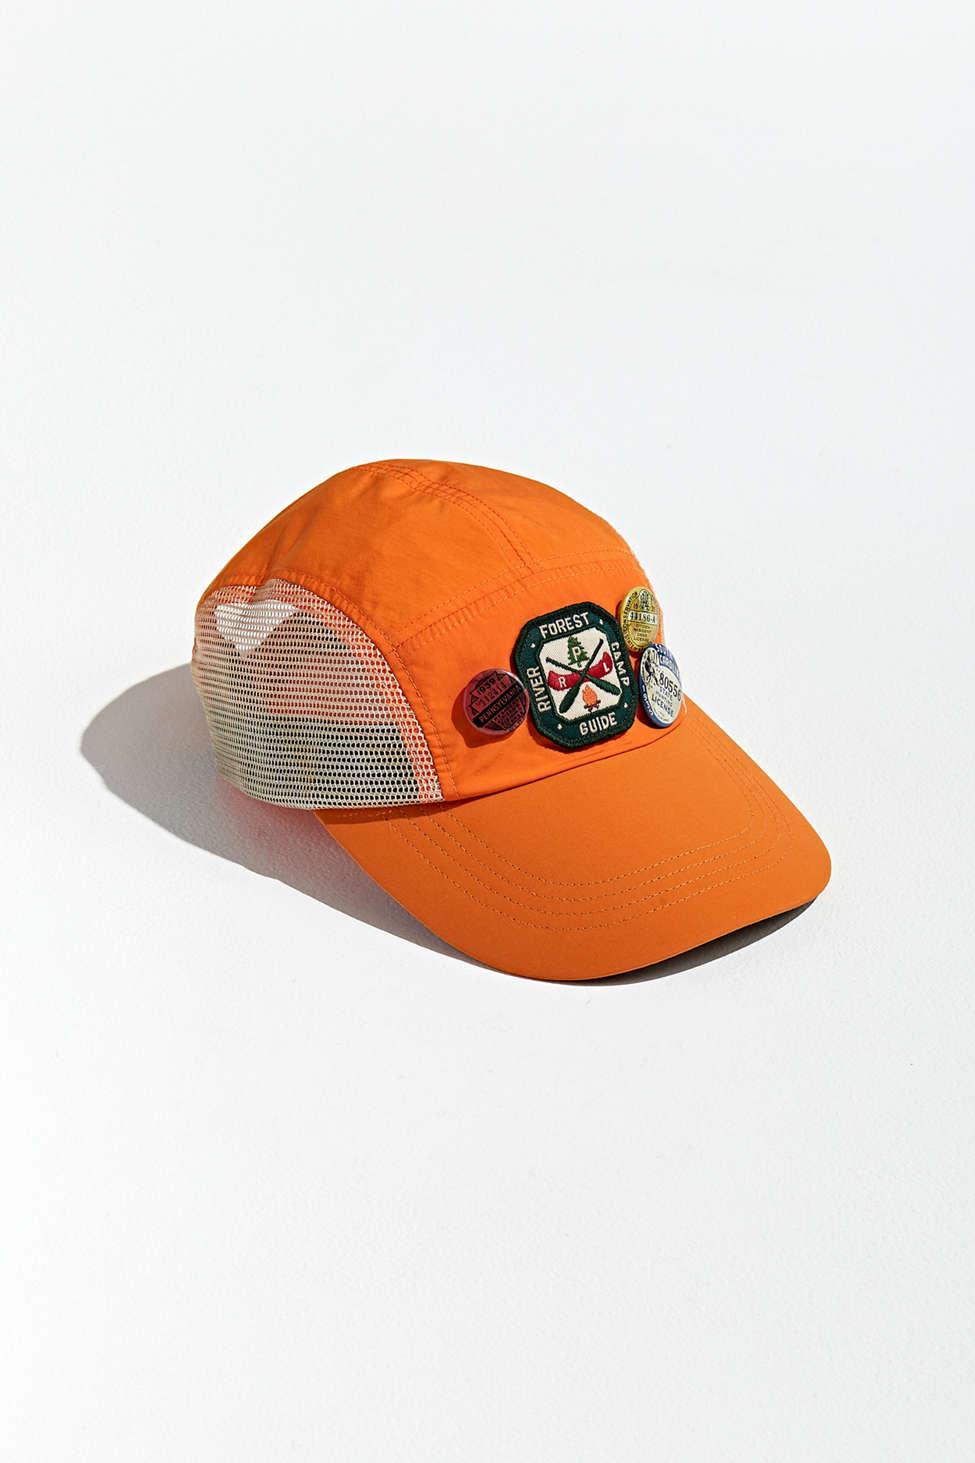 Polo Ralph Lauren Forest Guide 5-panel Fishing Hat in Orange for Men